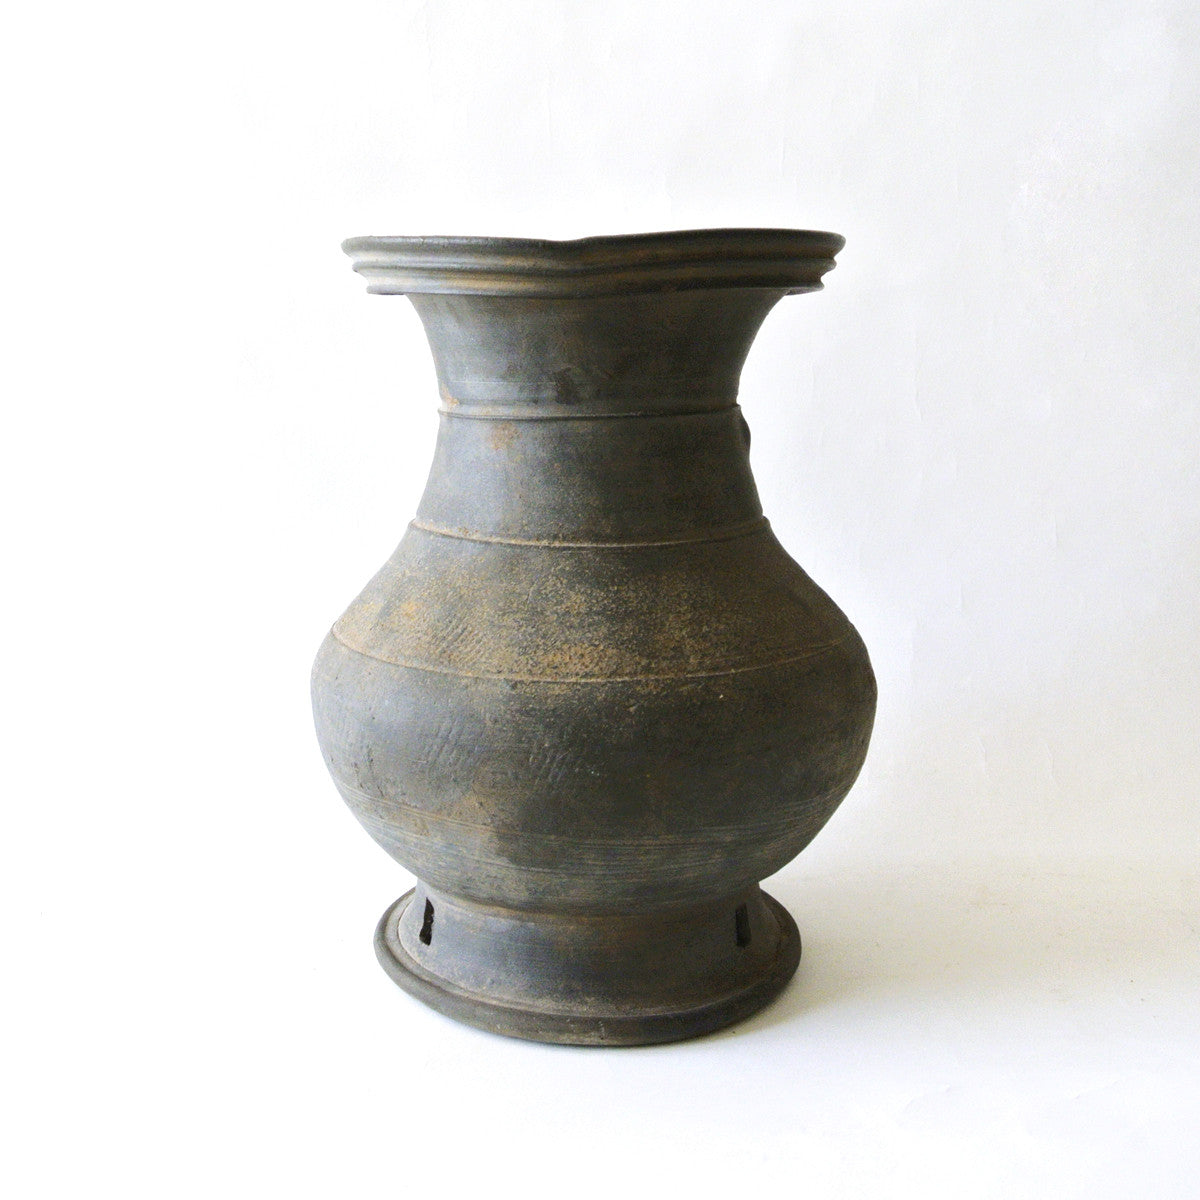 Ceremonial Vase with Ash-Glazed Design from Shilla Dynasty